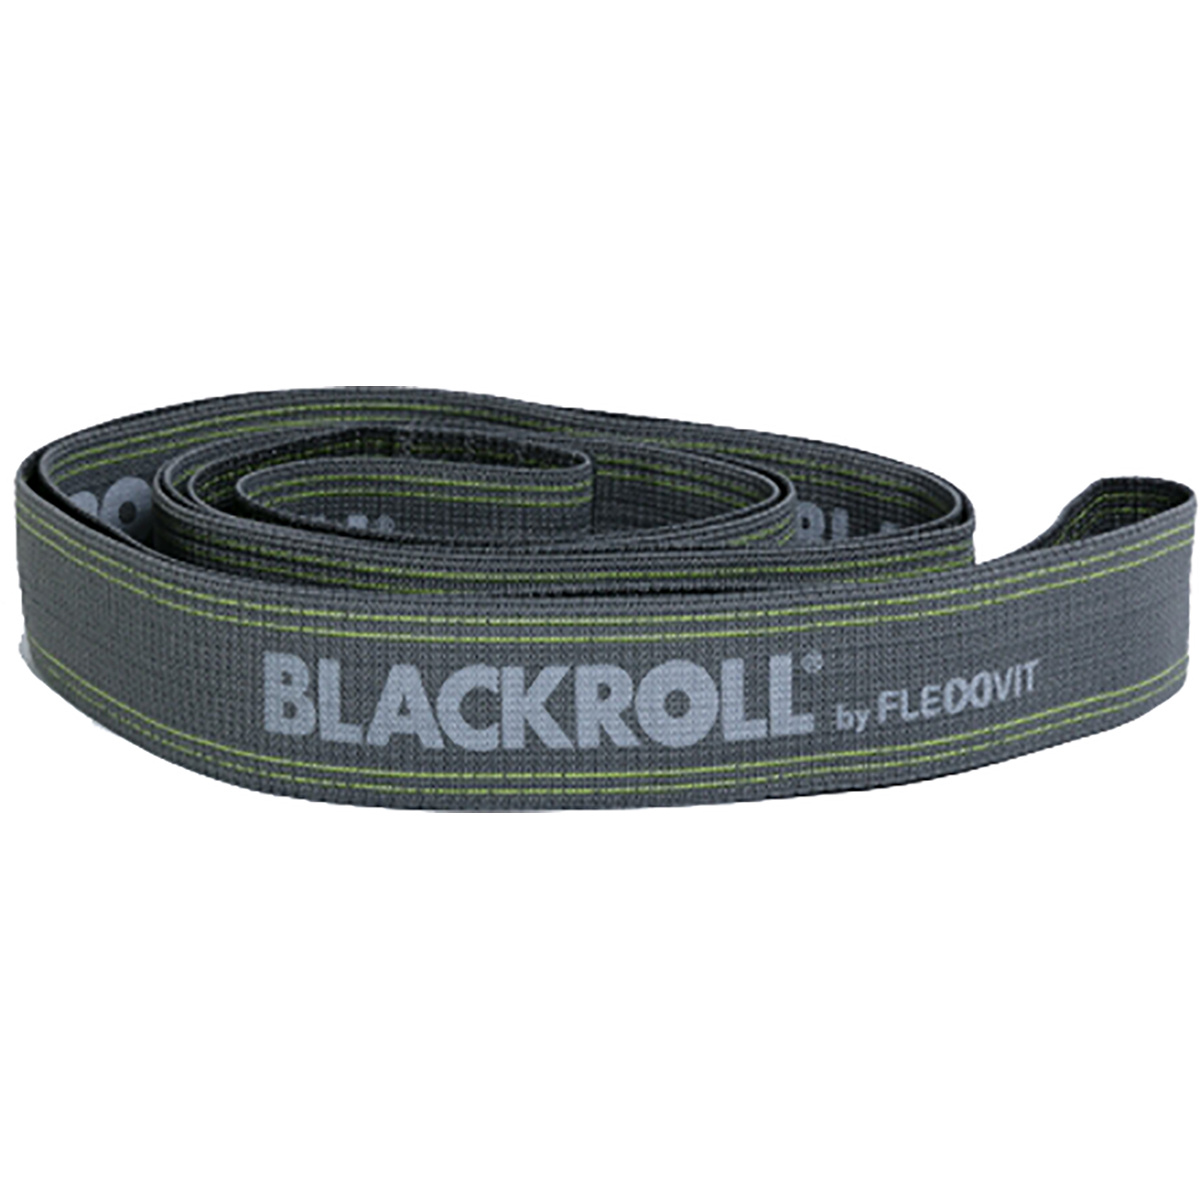 Blackroll Resist Trainingsband von Blackroll